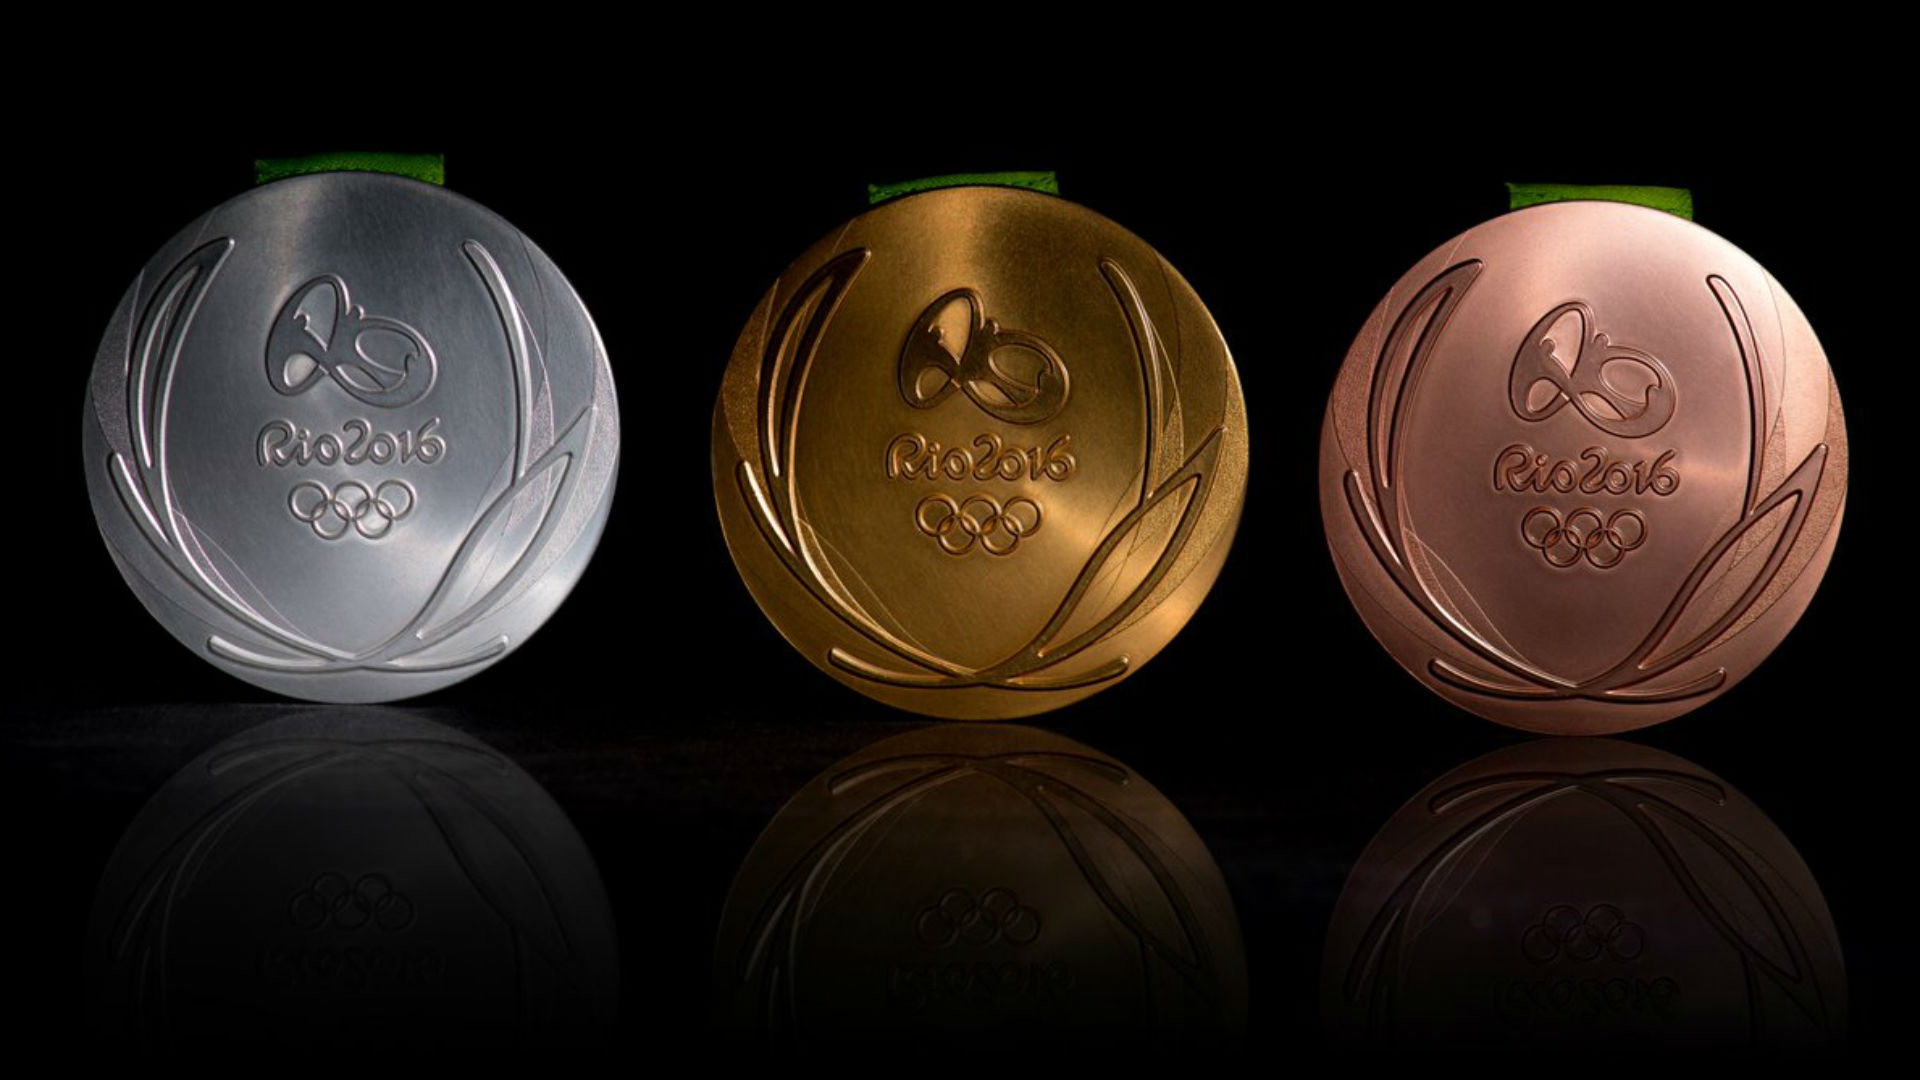 rio-2016-olympics-medals_1hko0oaxehu981n9pd27g1h4z9.jpg?t=1344886861